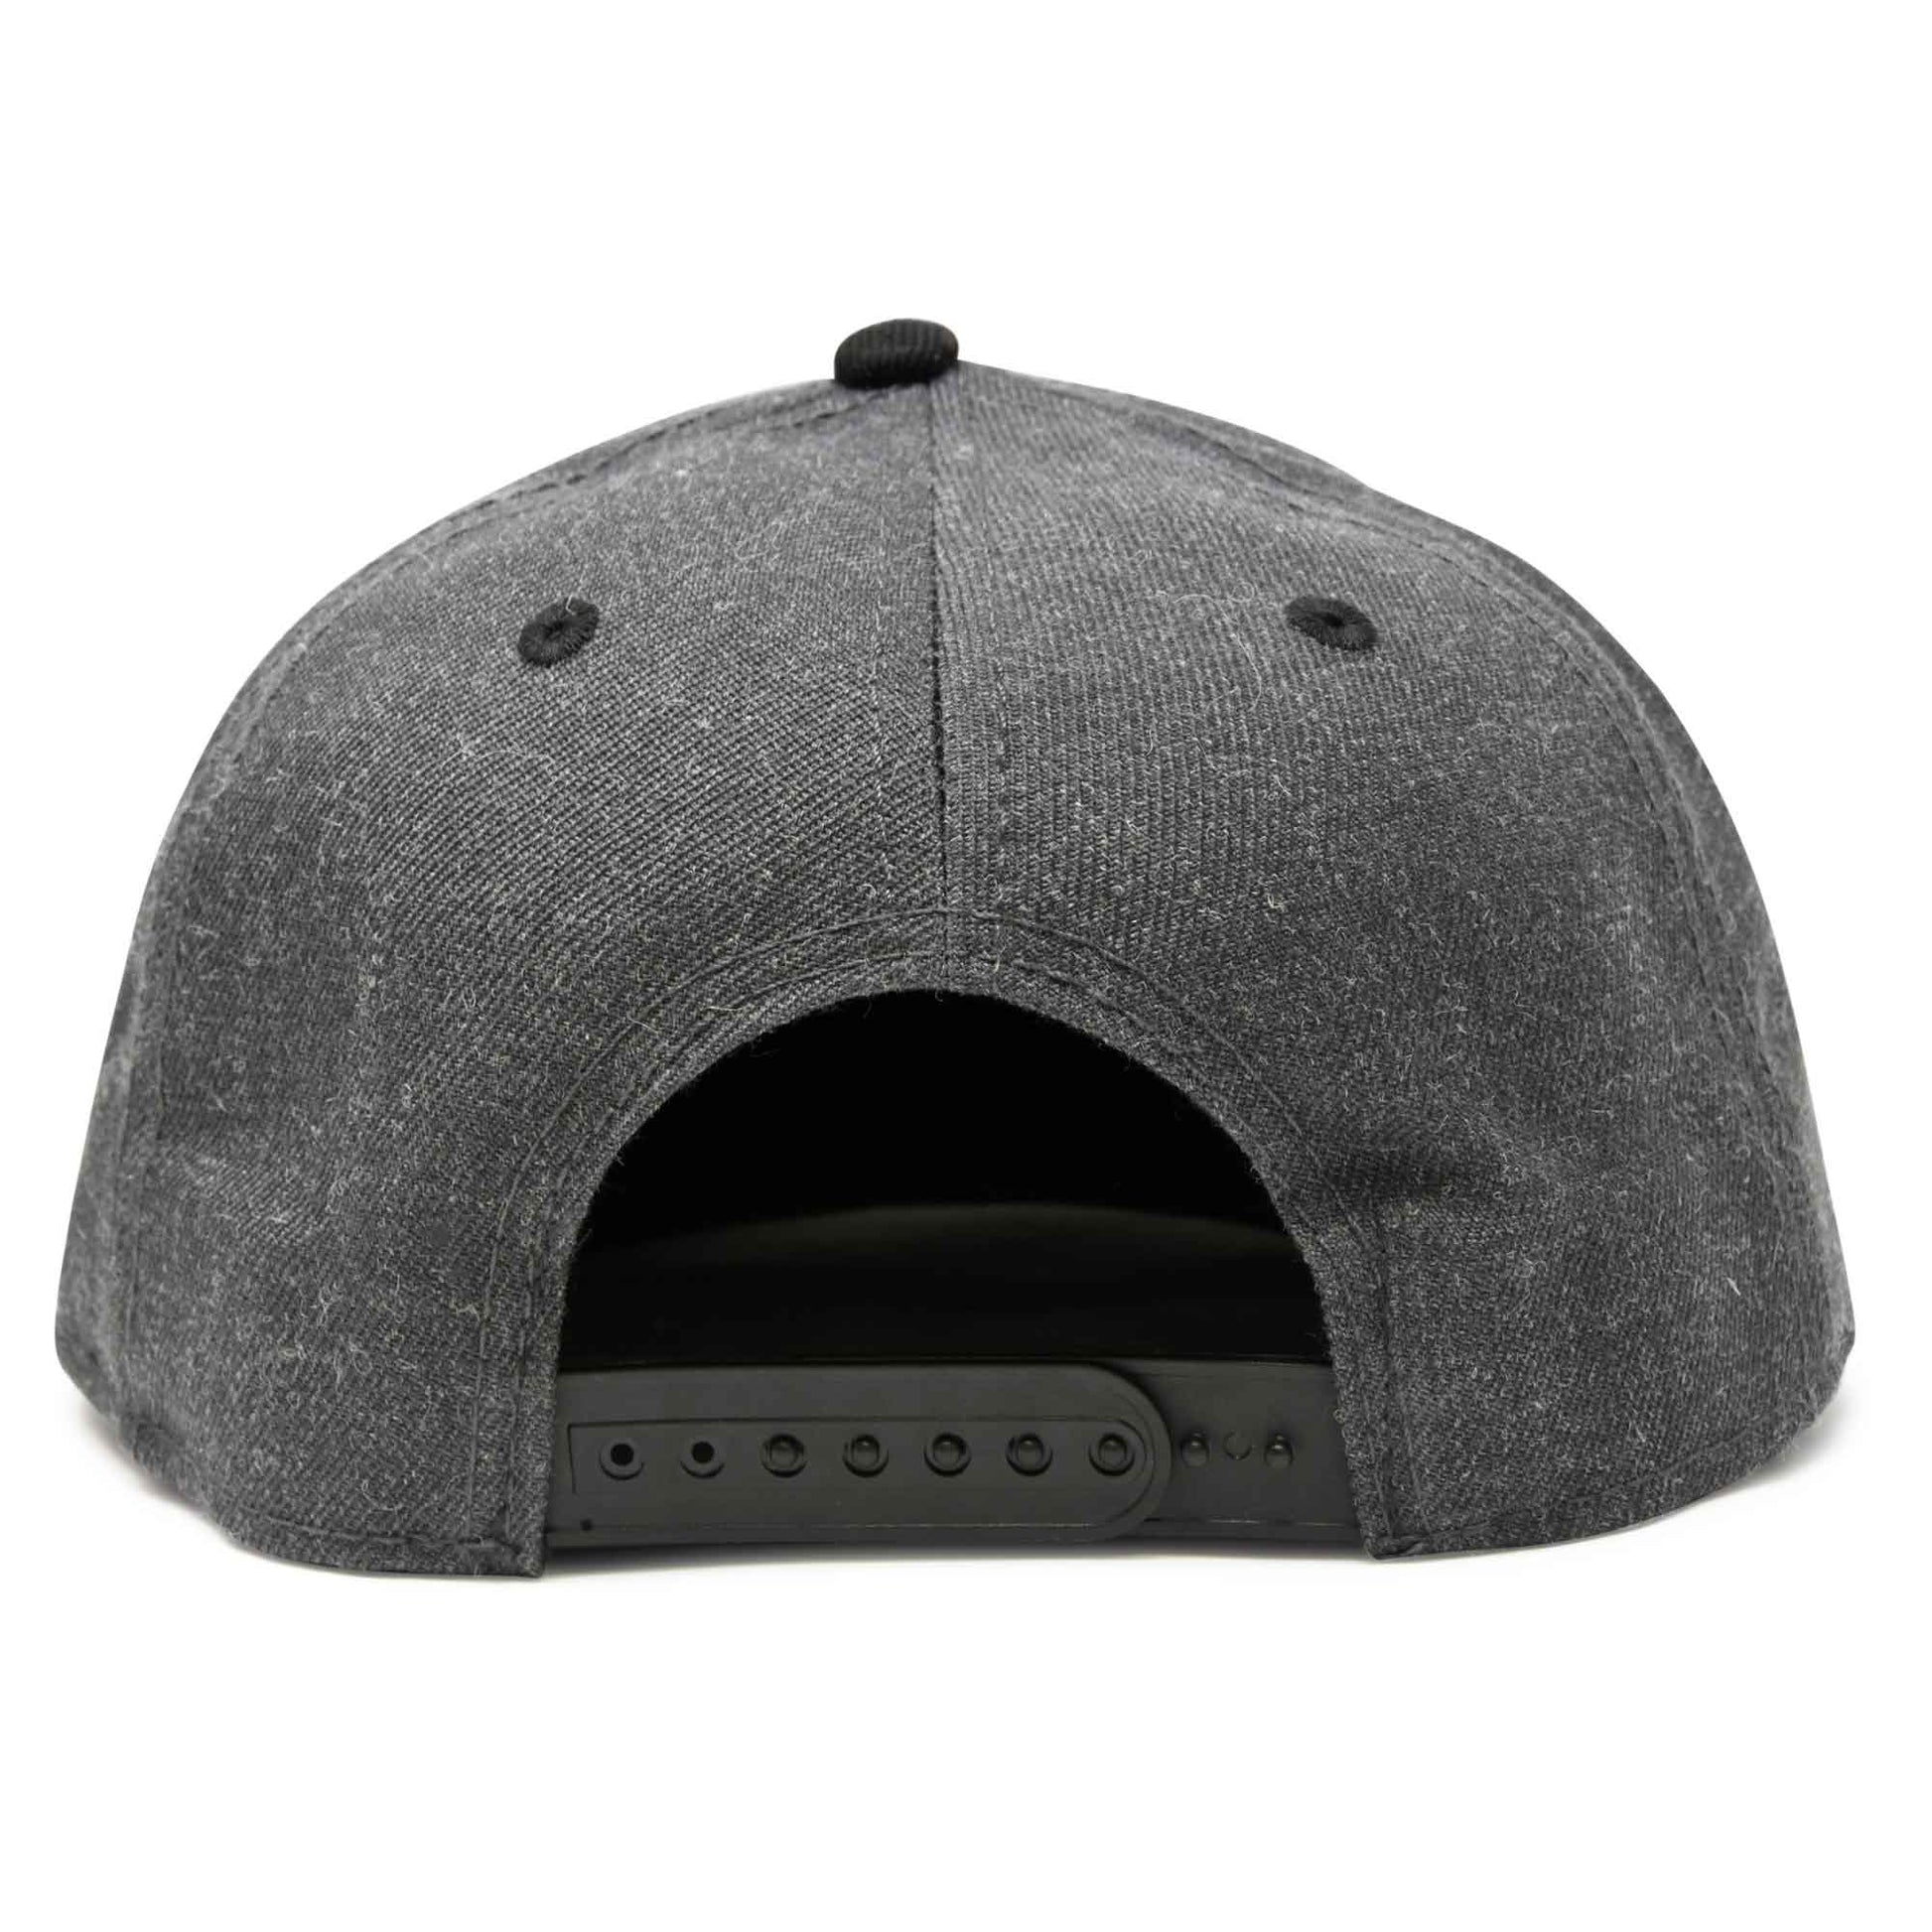 Dalix Captain Snapback Flat Bill Baseball Hat Embroidered Cap Mens in Black Light Gray